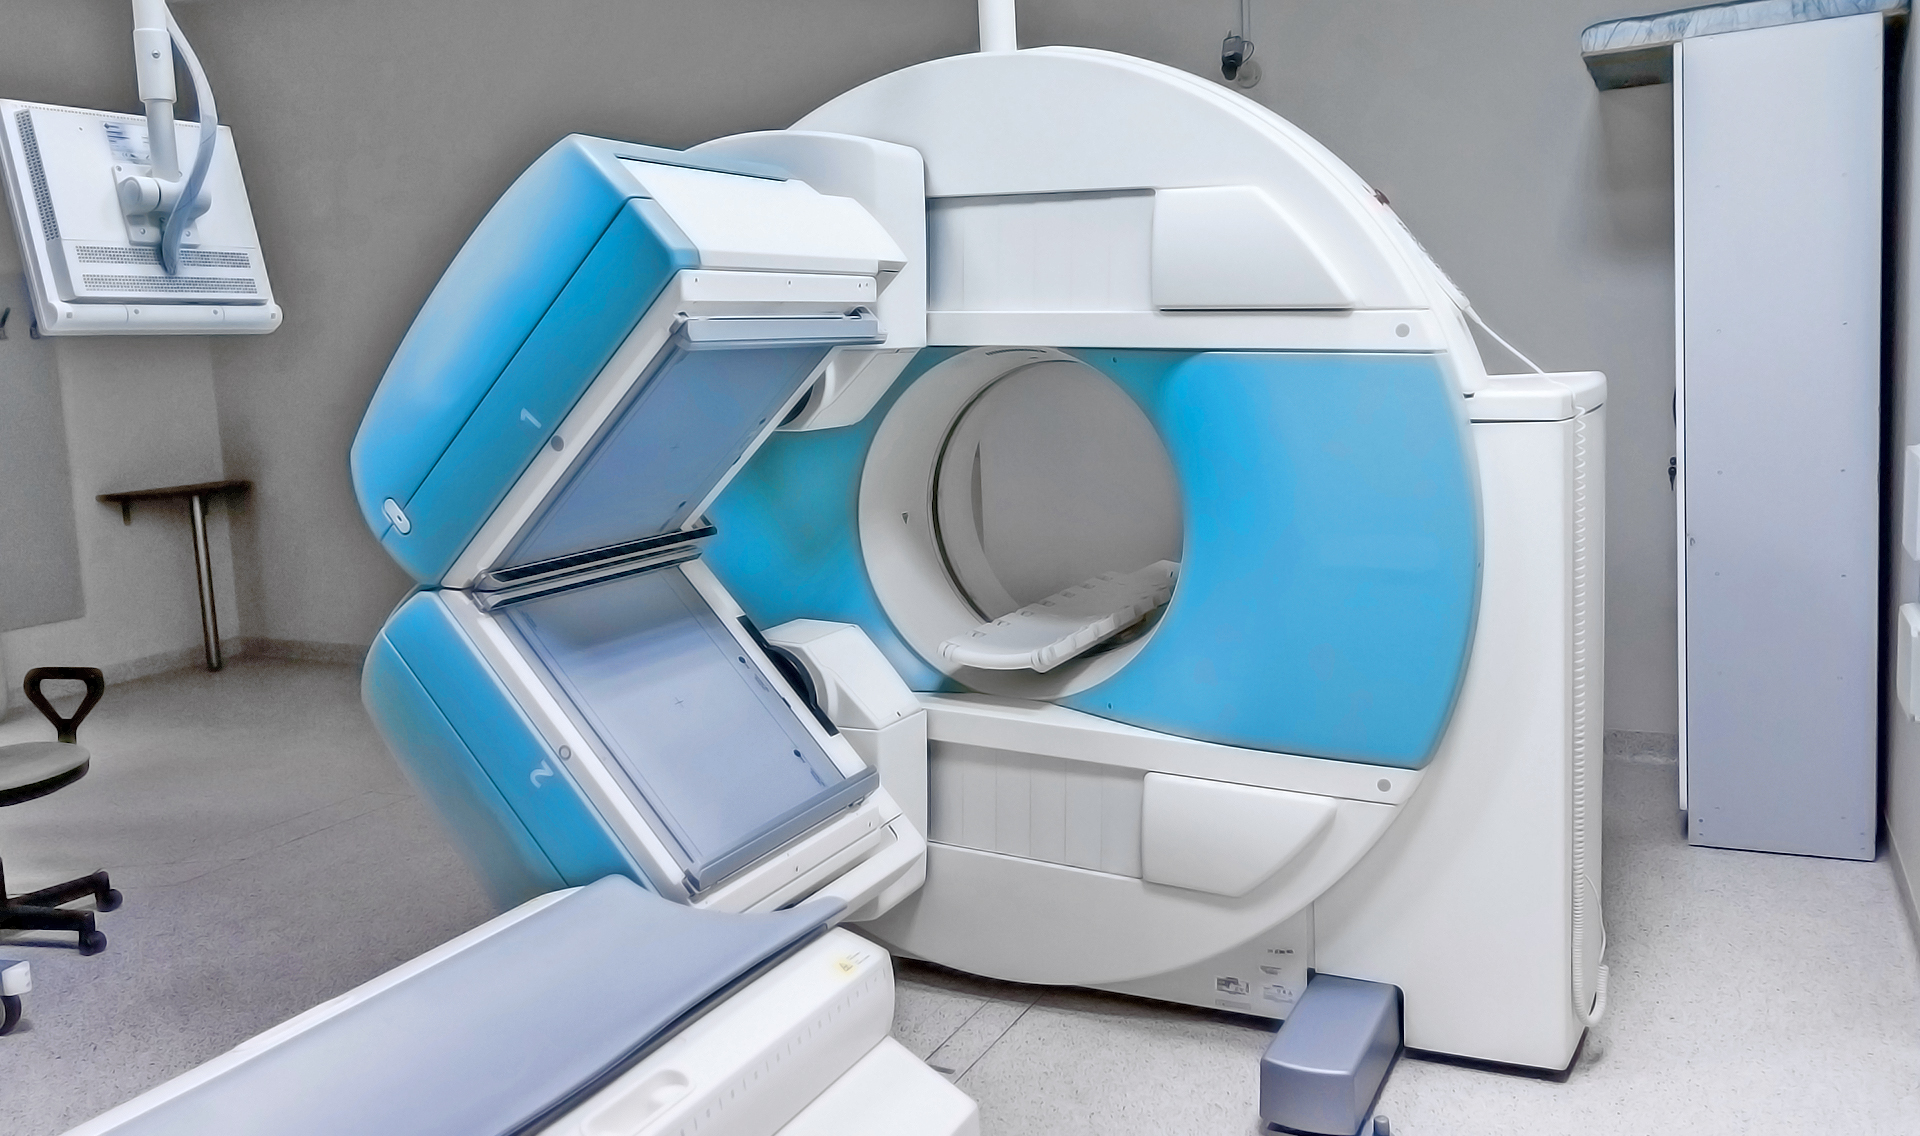 INT. MRI MACHINE – DAY